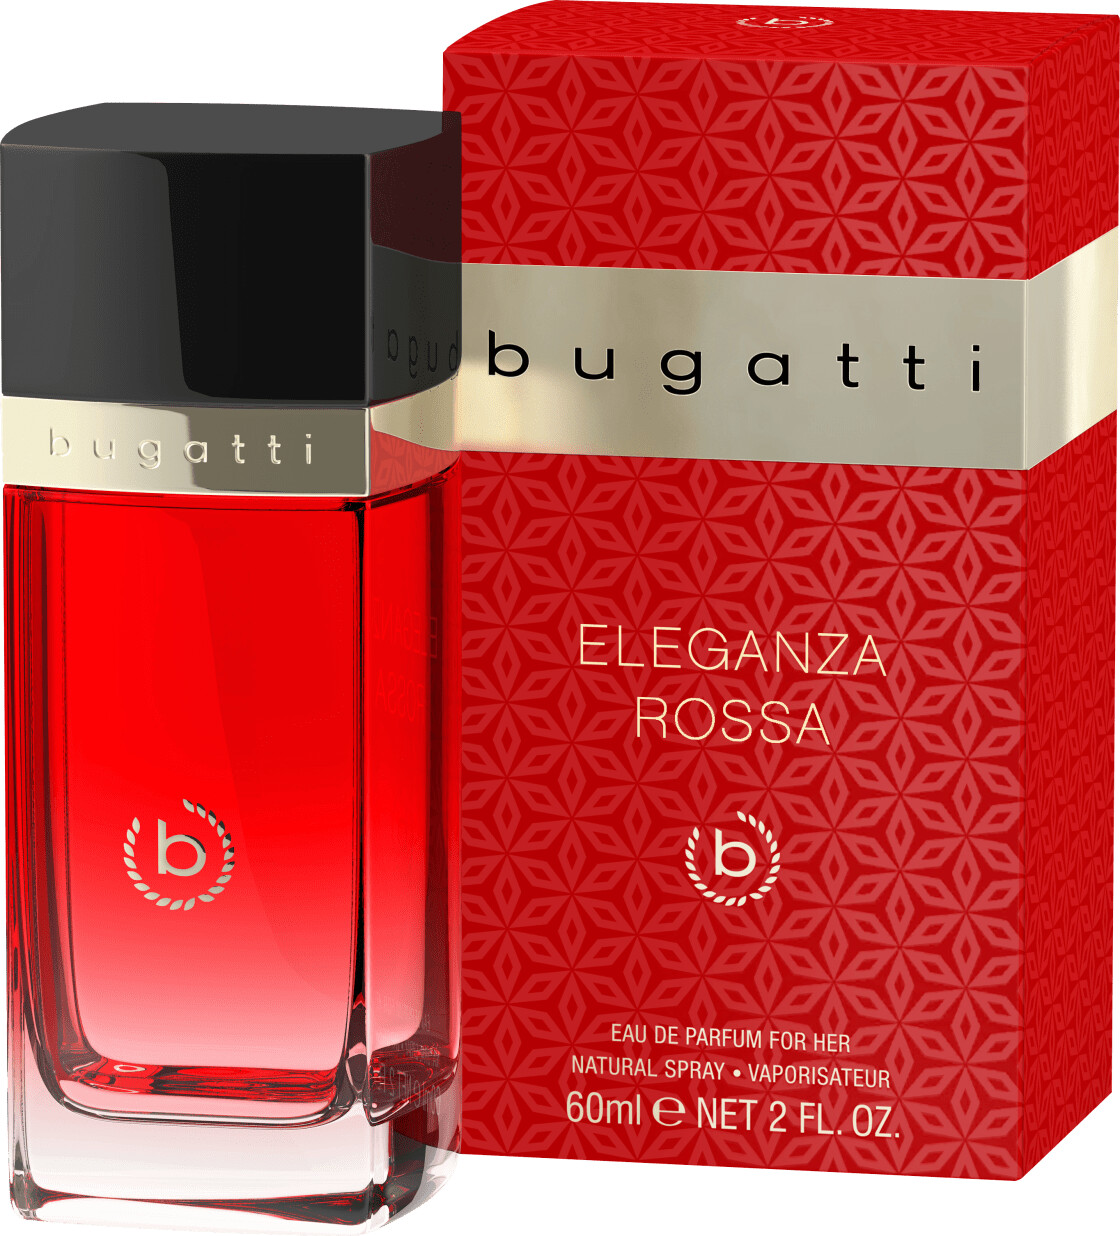 ab Eleganza Rossa 17,45 Bugatti € (60ml) | Eau Preisvergleich bei Parfum de